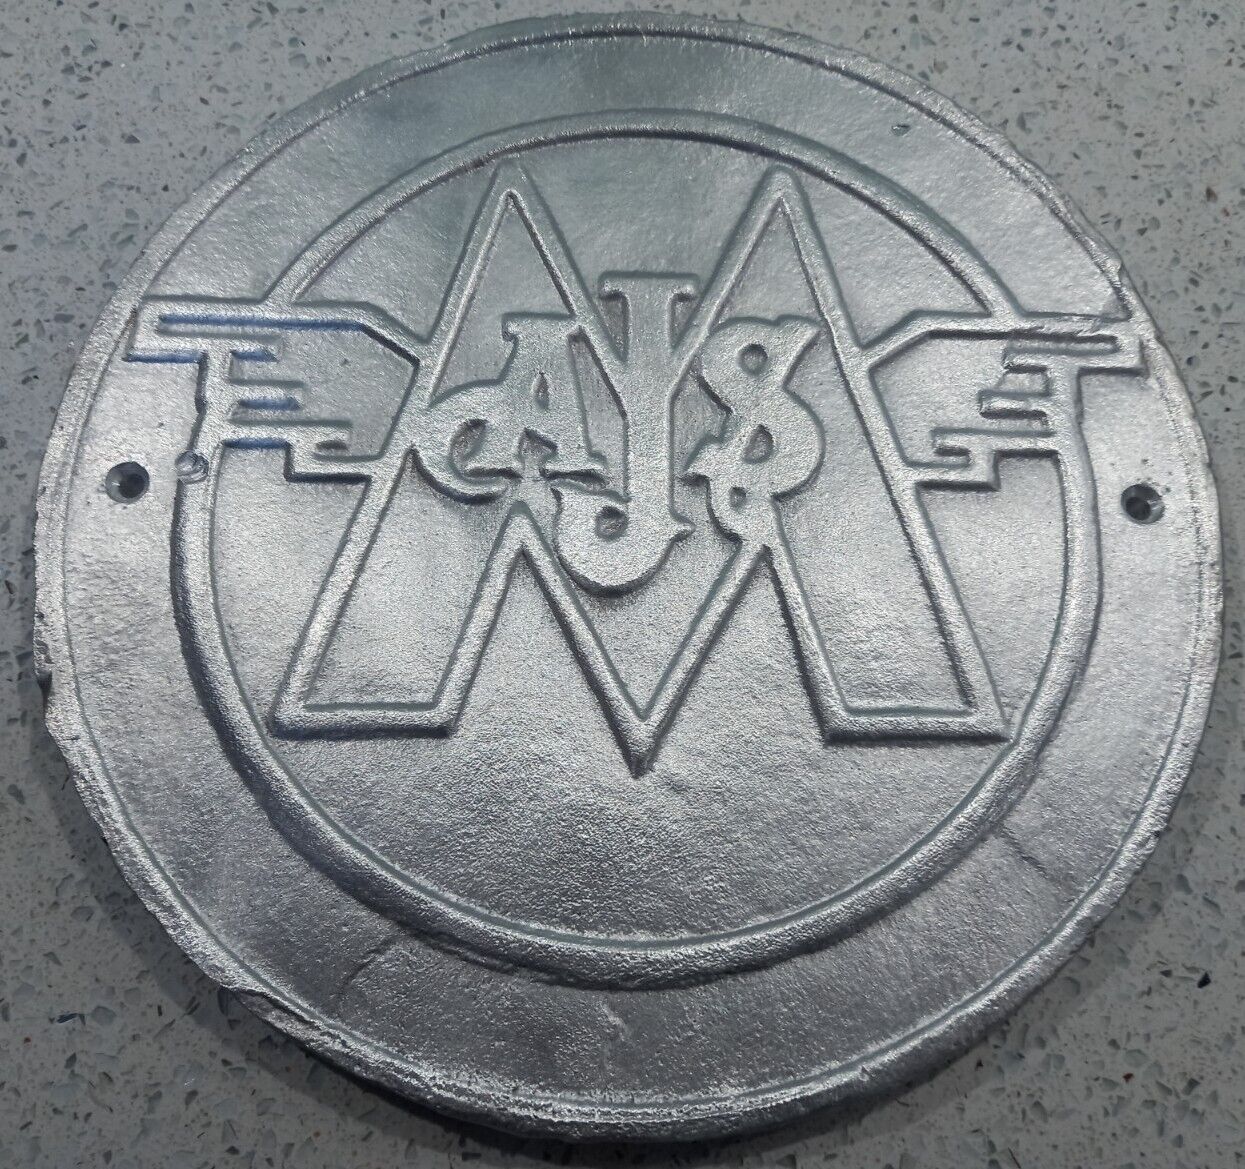 AJS Matchless Cast Aluminium Sign Not Cast Iron Garage Motorcycle Plaque Mancave